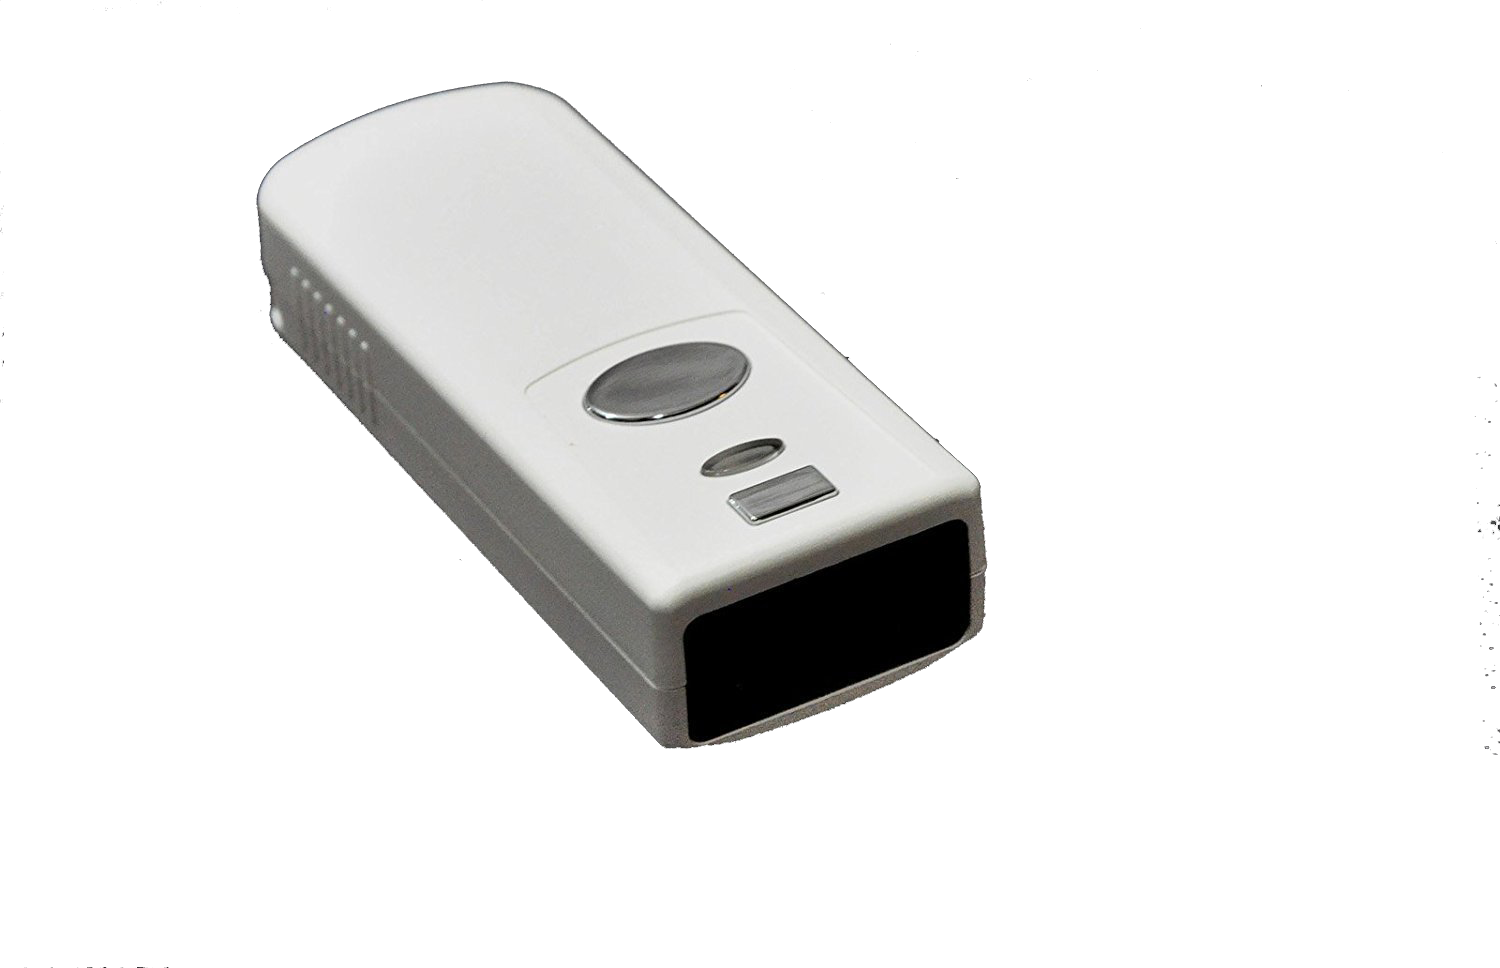 Mini USB Bluetooth 4.0 Adapter - 10m (33ft) Class 2 EDR Wireless Dongle -  BCI Imaging Supplies